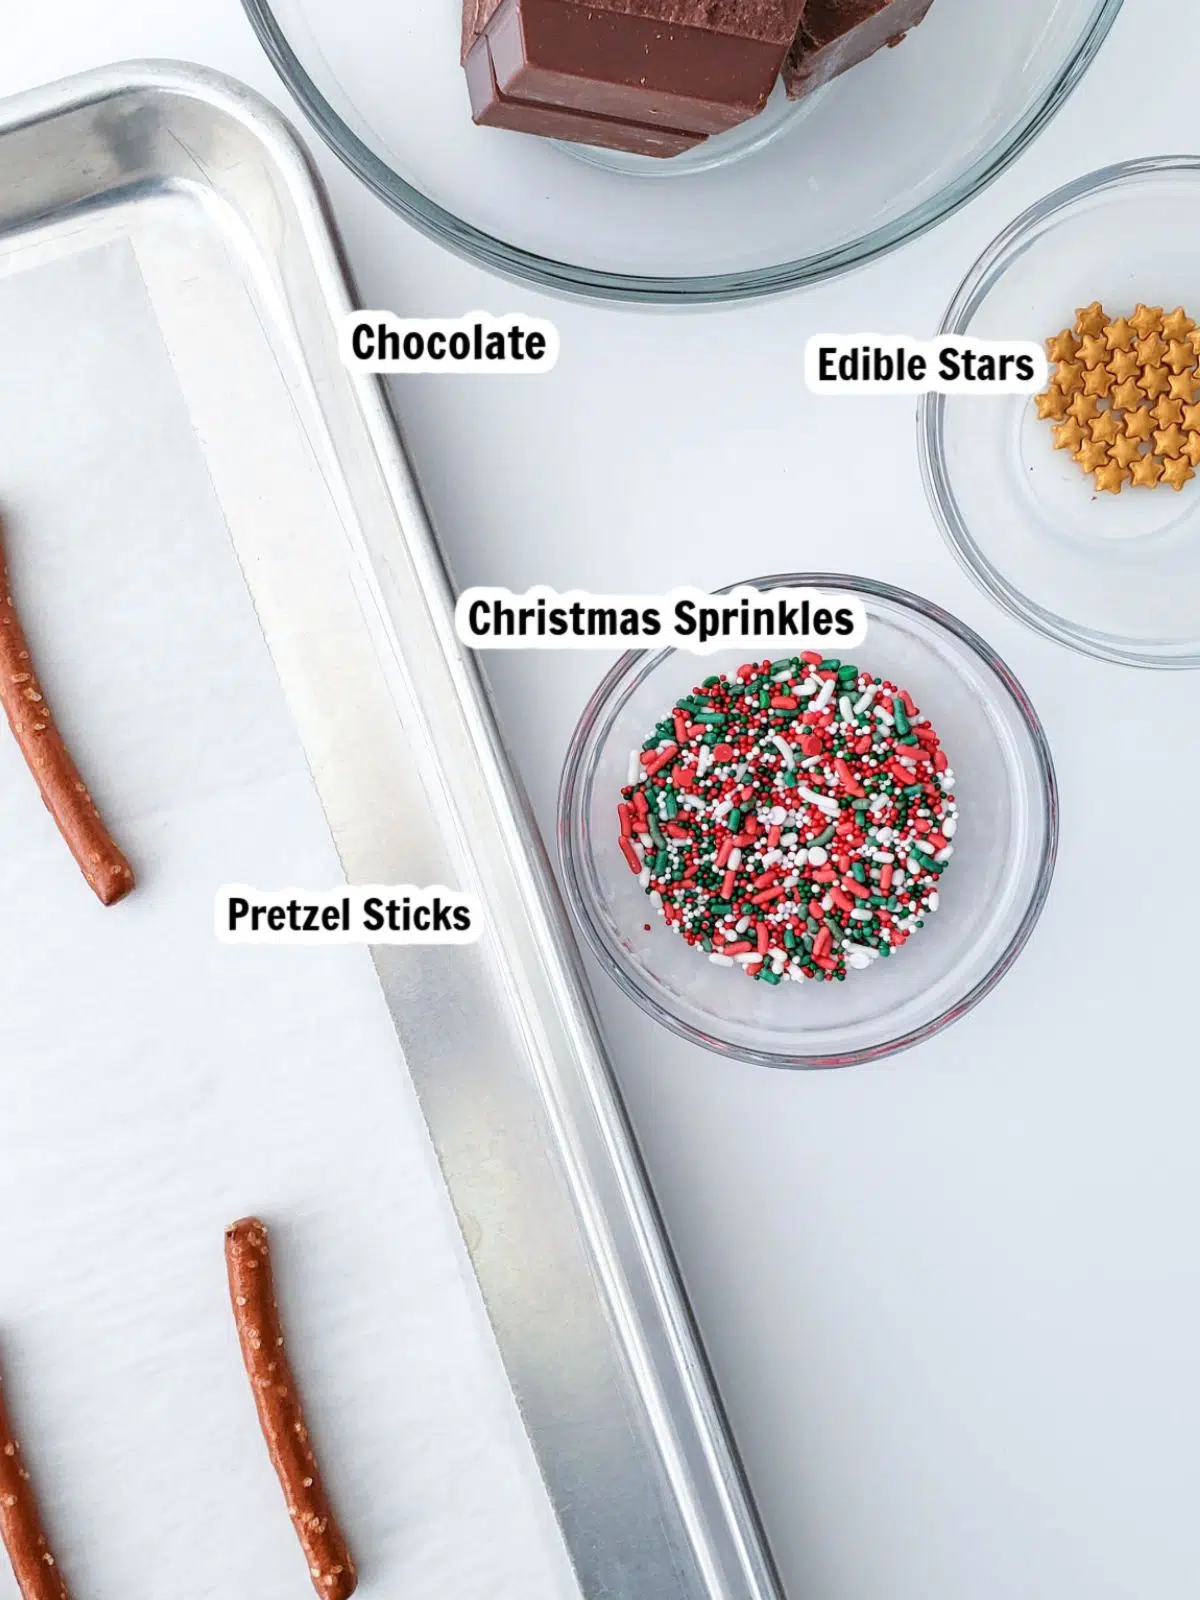 ingredients for chocolate covered pretzel sticks.